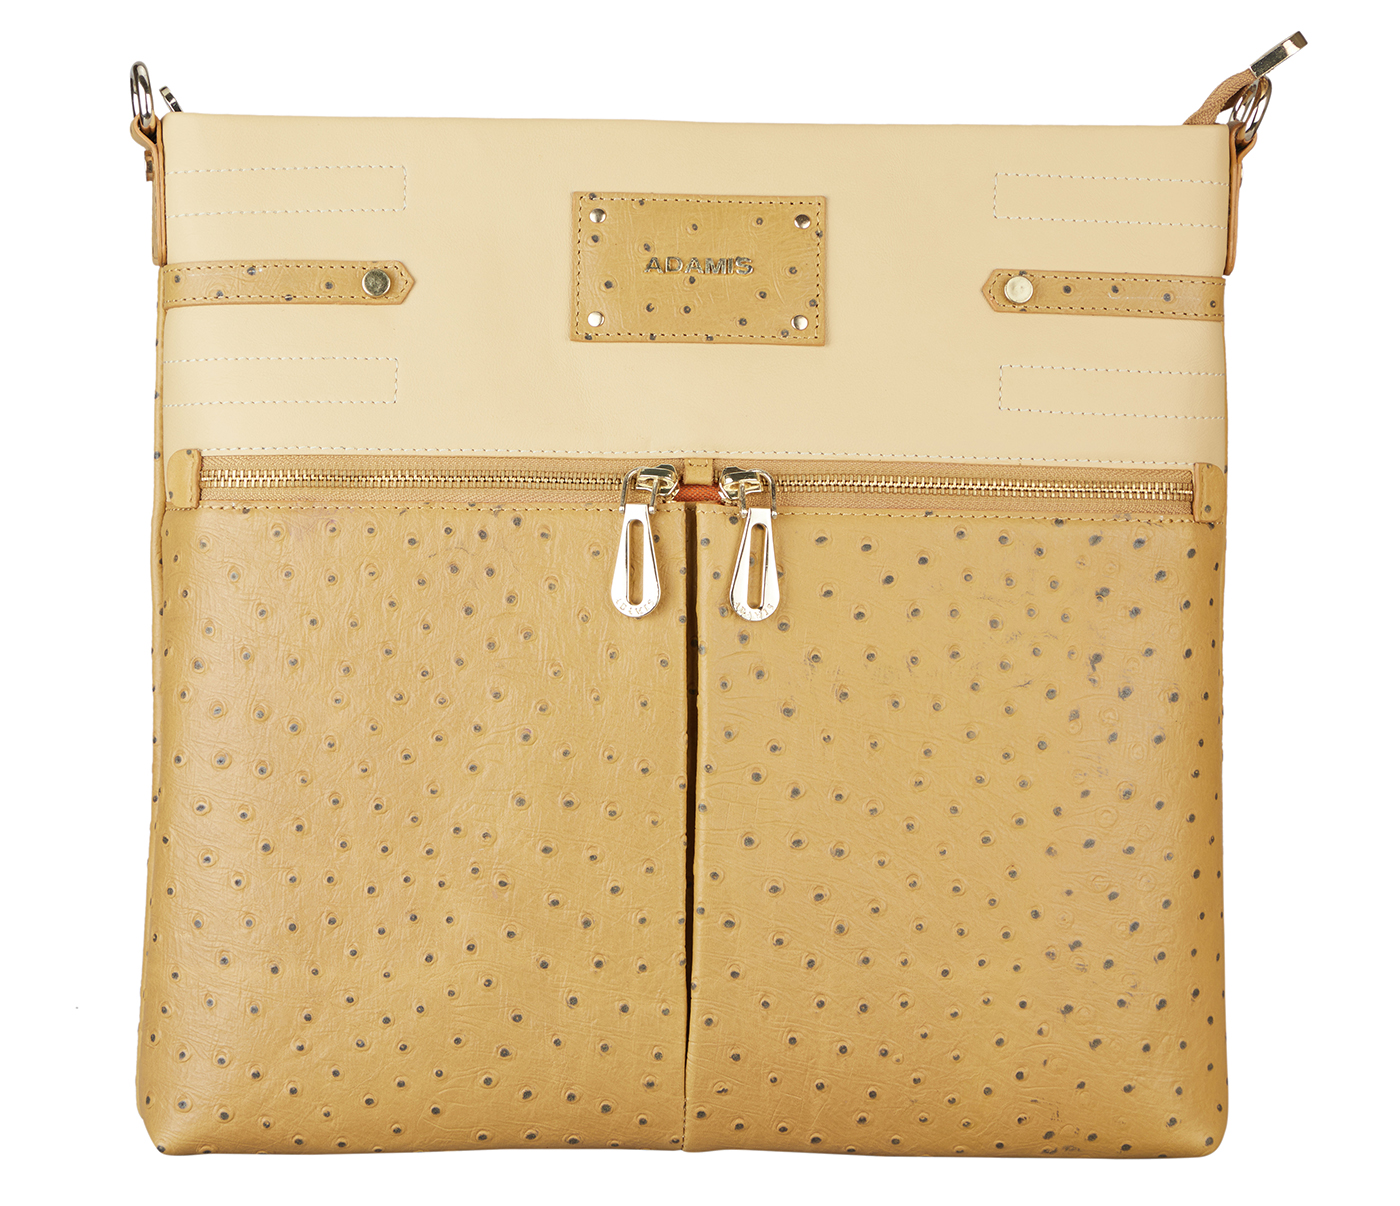 MK stone pattern leather beige purse with crossbody strap | Beige purses,  Beige bag, Purses